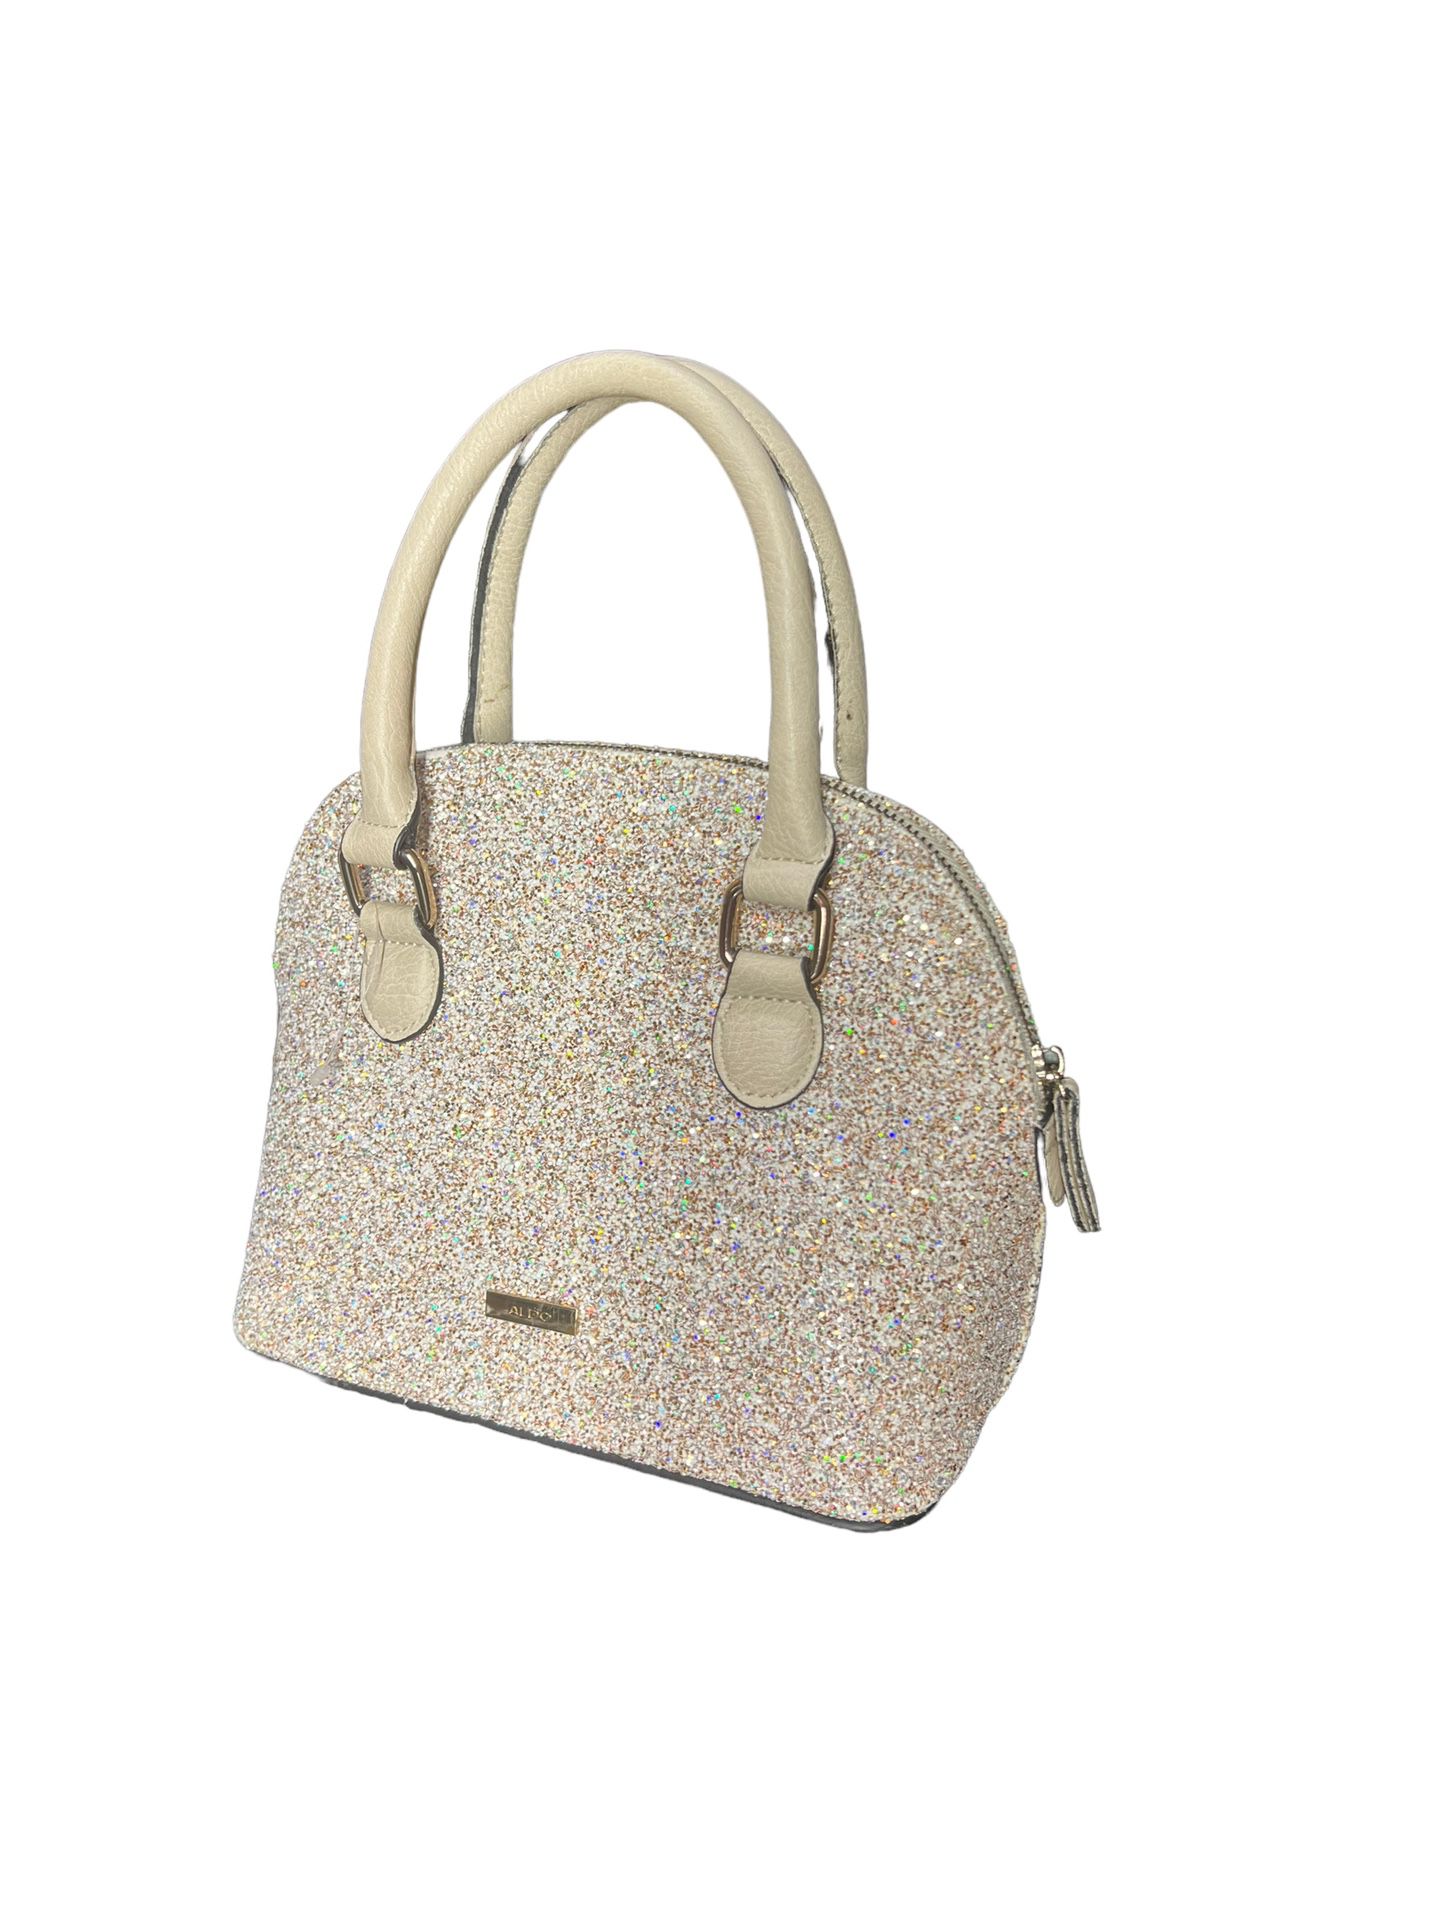 Aldo Pink and Gold Glitter Handbag Trendy Sparkly Sparkle Purse